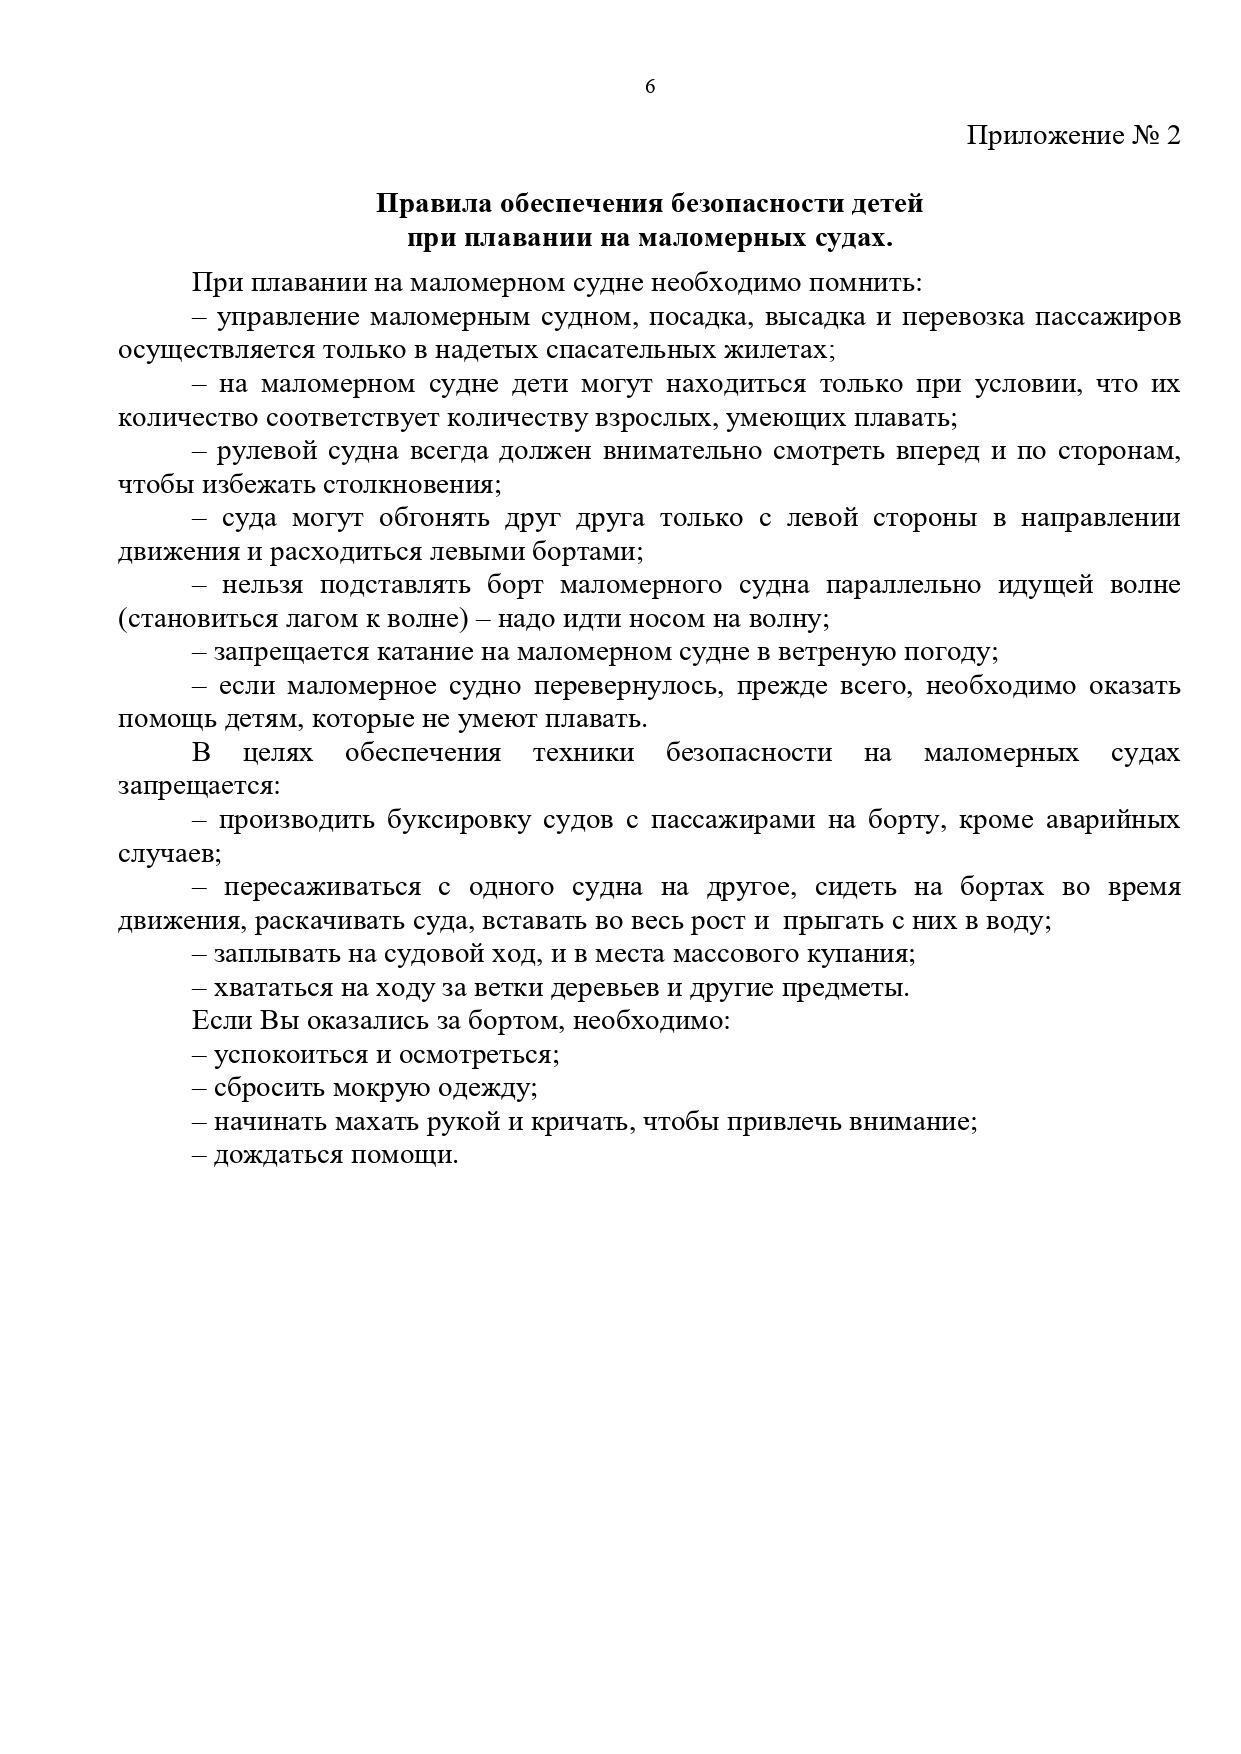 МР в ДОЛ page-0006